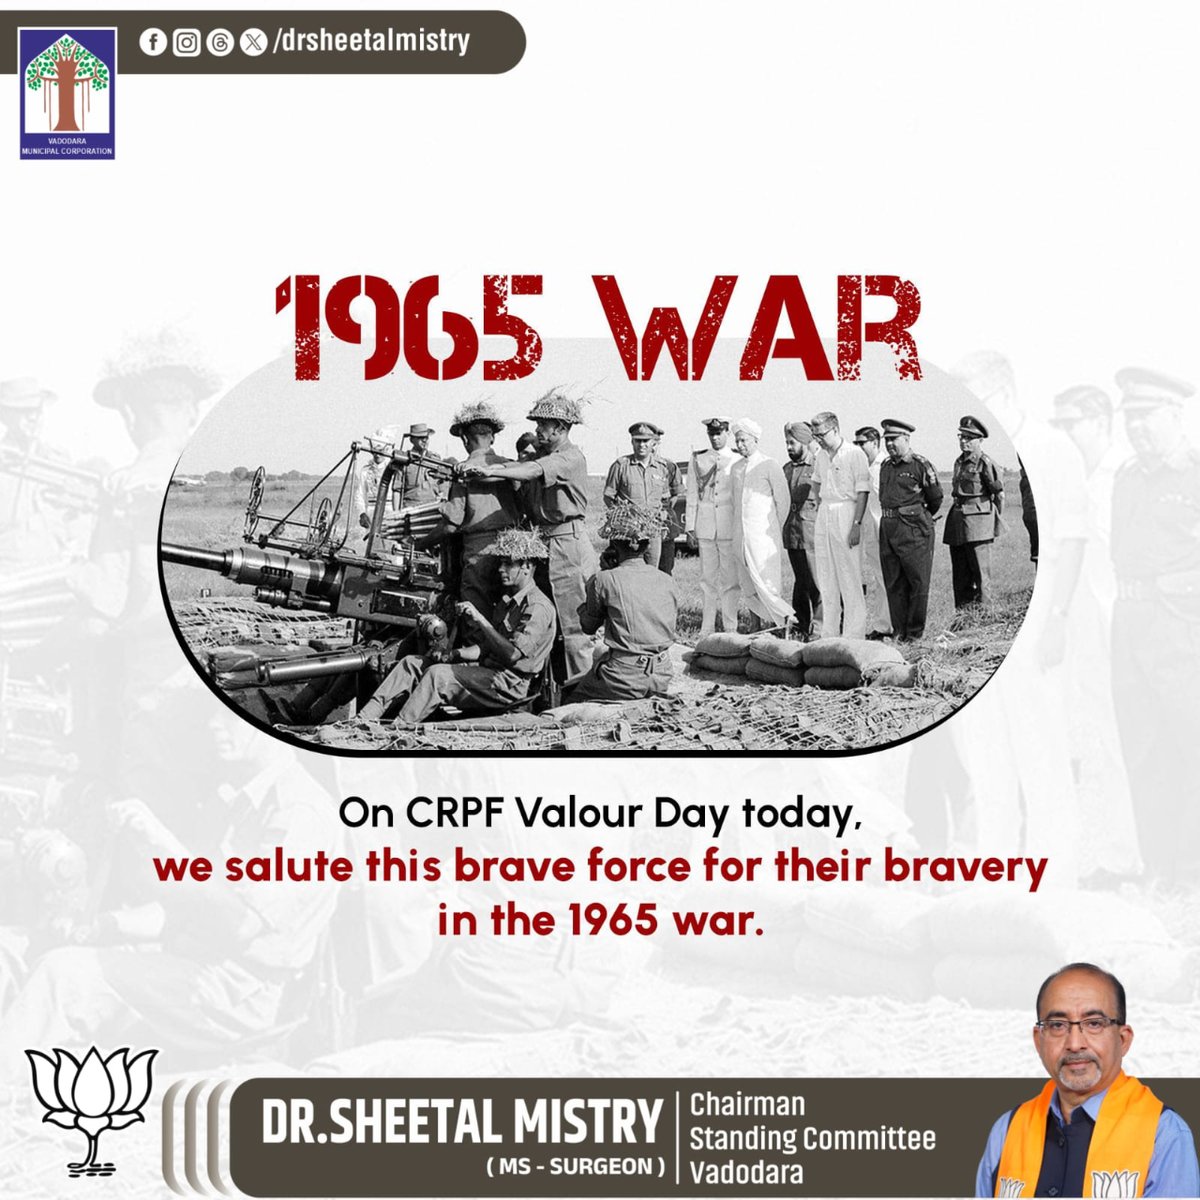 on CRPF valour day today. 

we salute this brave force for their bravery in the 1965 war.. 

#vmcvadodara #standingcommittechairman #drsheetalmistry #drsheetalmistrybjp #PMOIndia #bjp4vadodara #bjp4gujarat